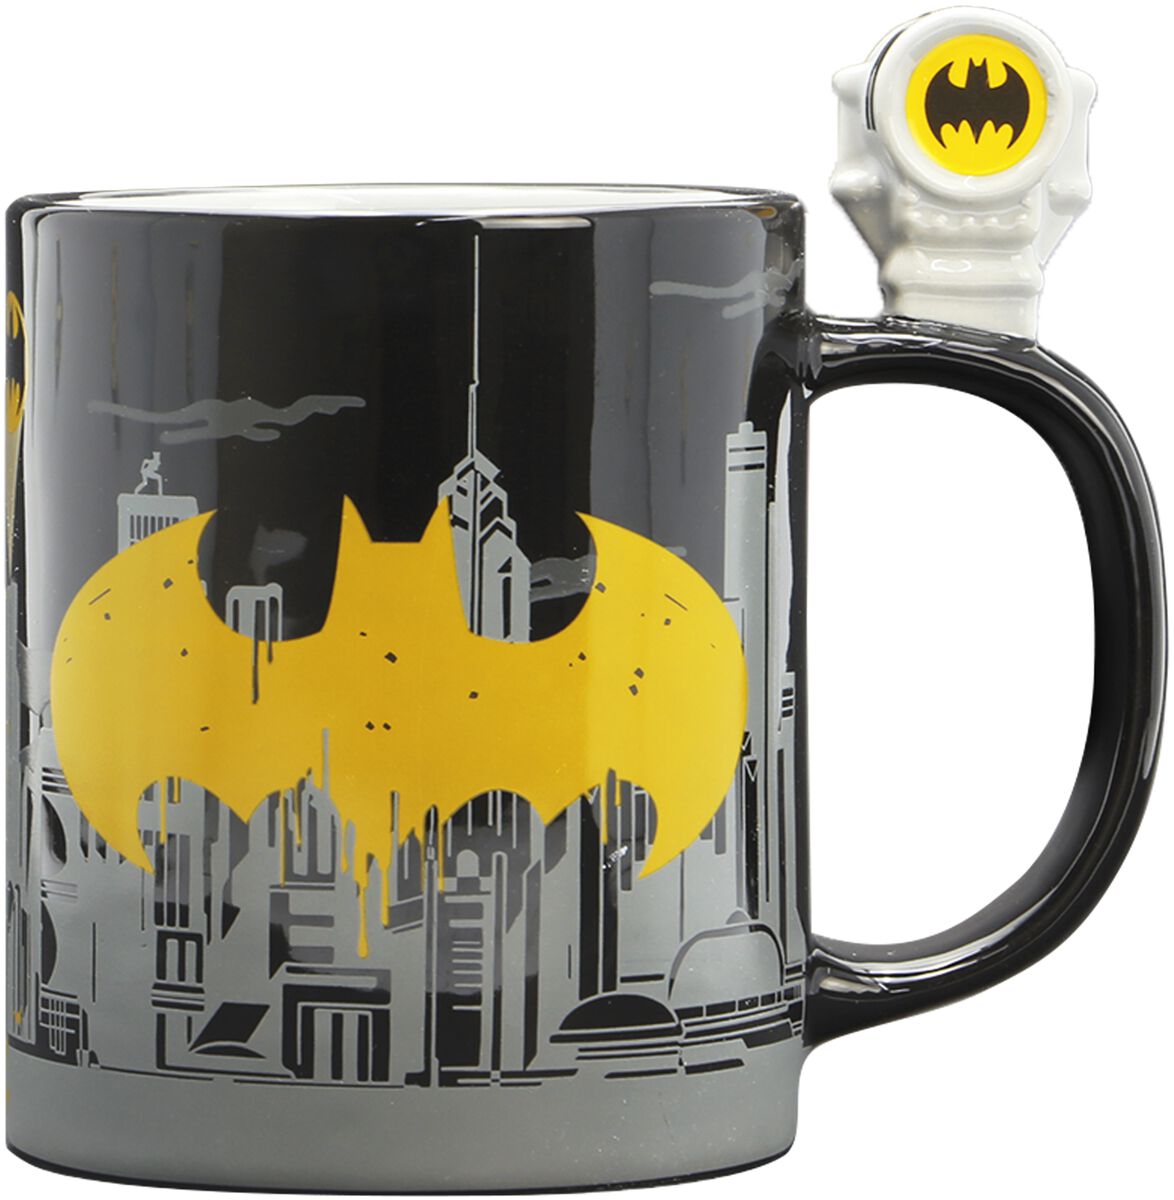 Batman - DC Comics Tasse - Bat-Signal & Batman 3D Tasse - schwarz/grau/gelb  - Lizenzierter Fanartikel